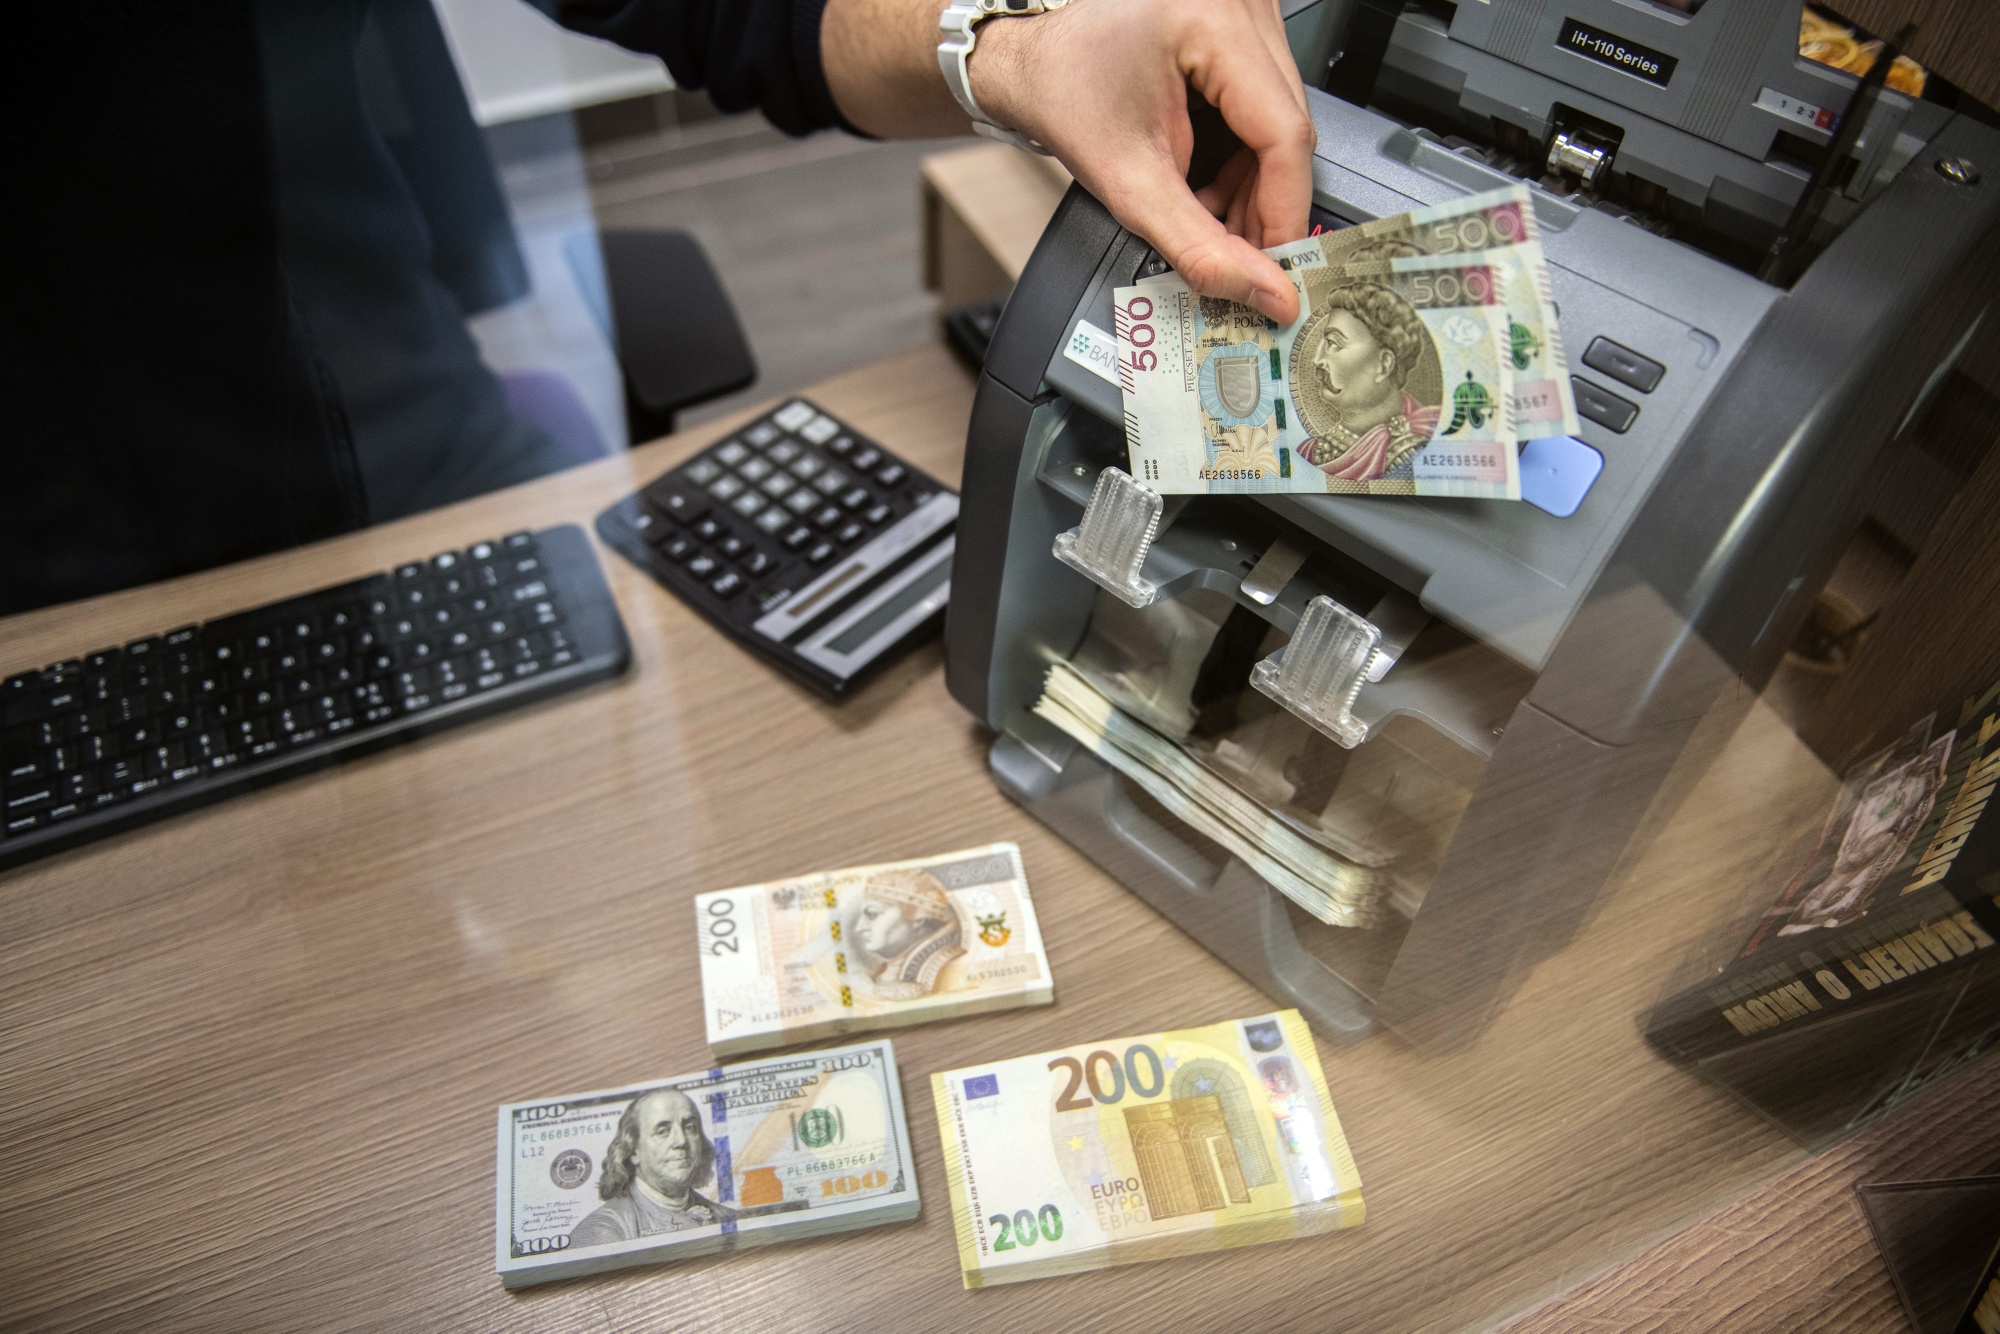 Hungarian forint to Euro exchange rates estimate 2014-2016